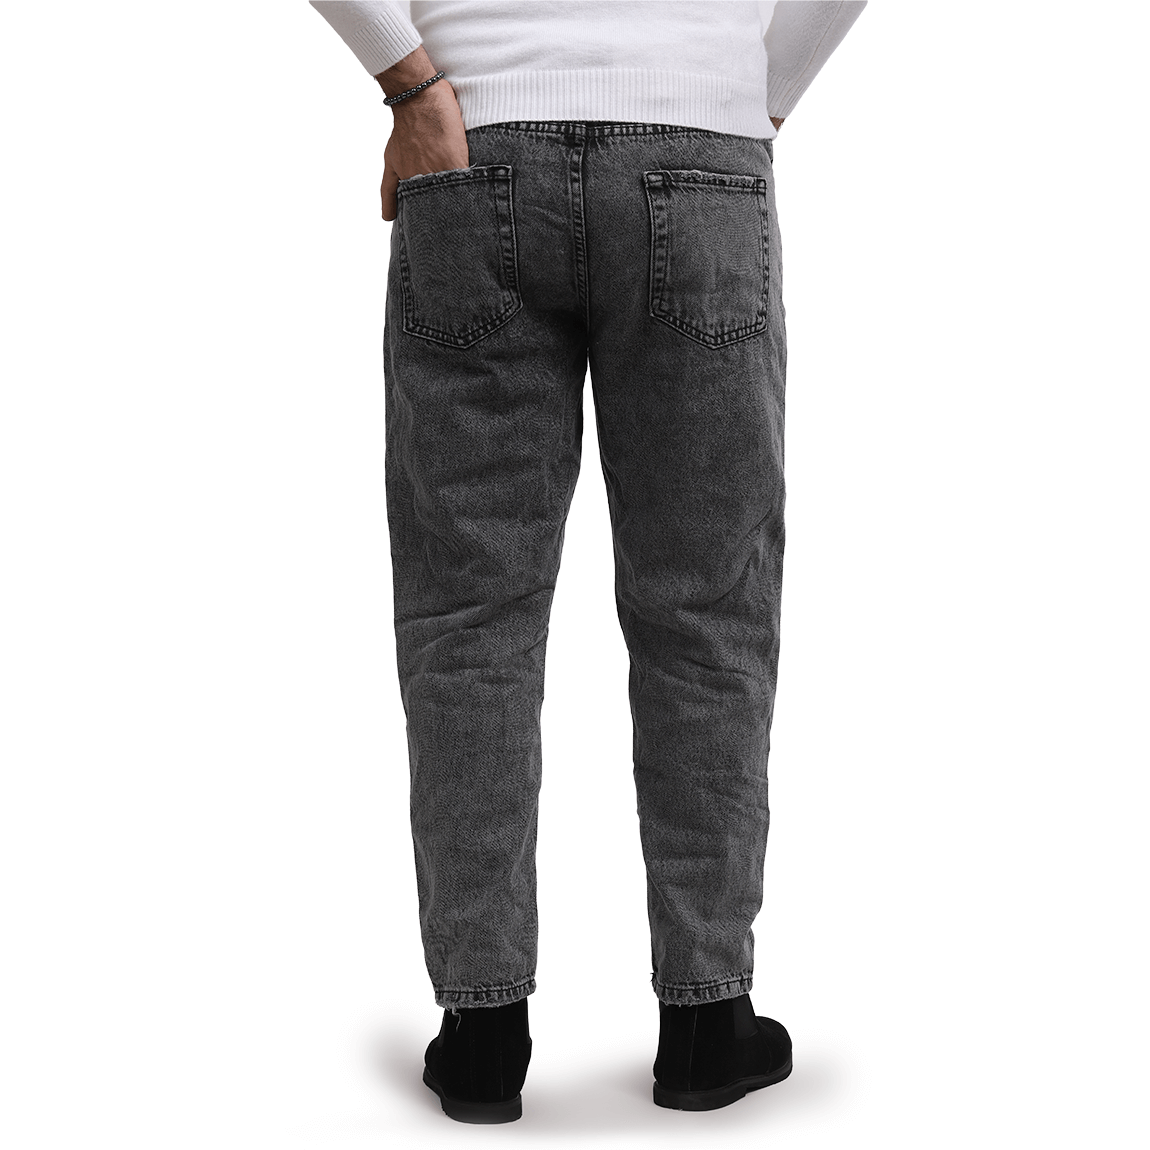 21GM-5-1-1155-3-بنطلون جينز بوي فريند Jeans-Pant, بنطلون, بنطلون جينز, بوي فريند رجالي, Pukkastyle